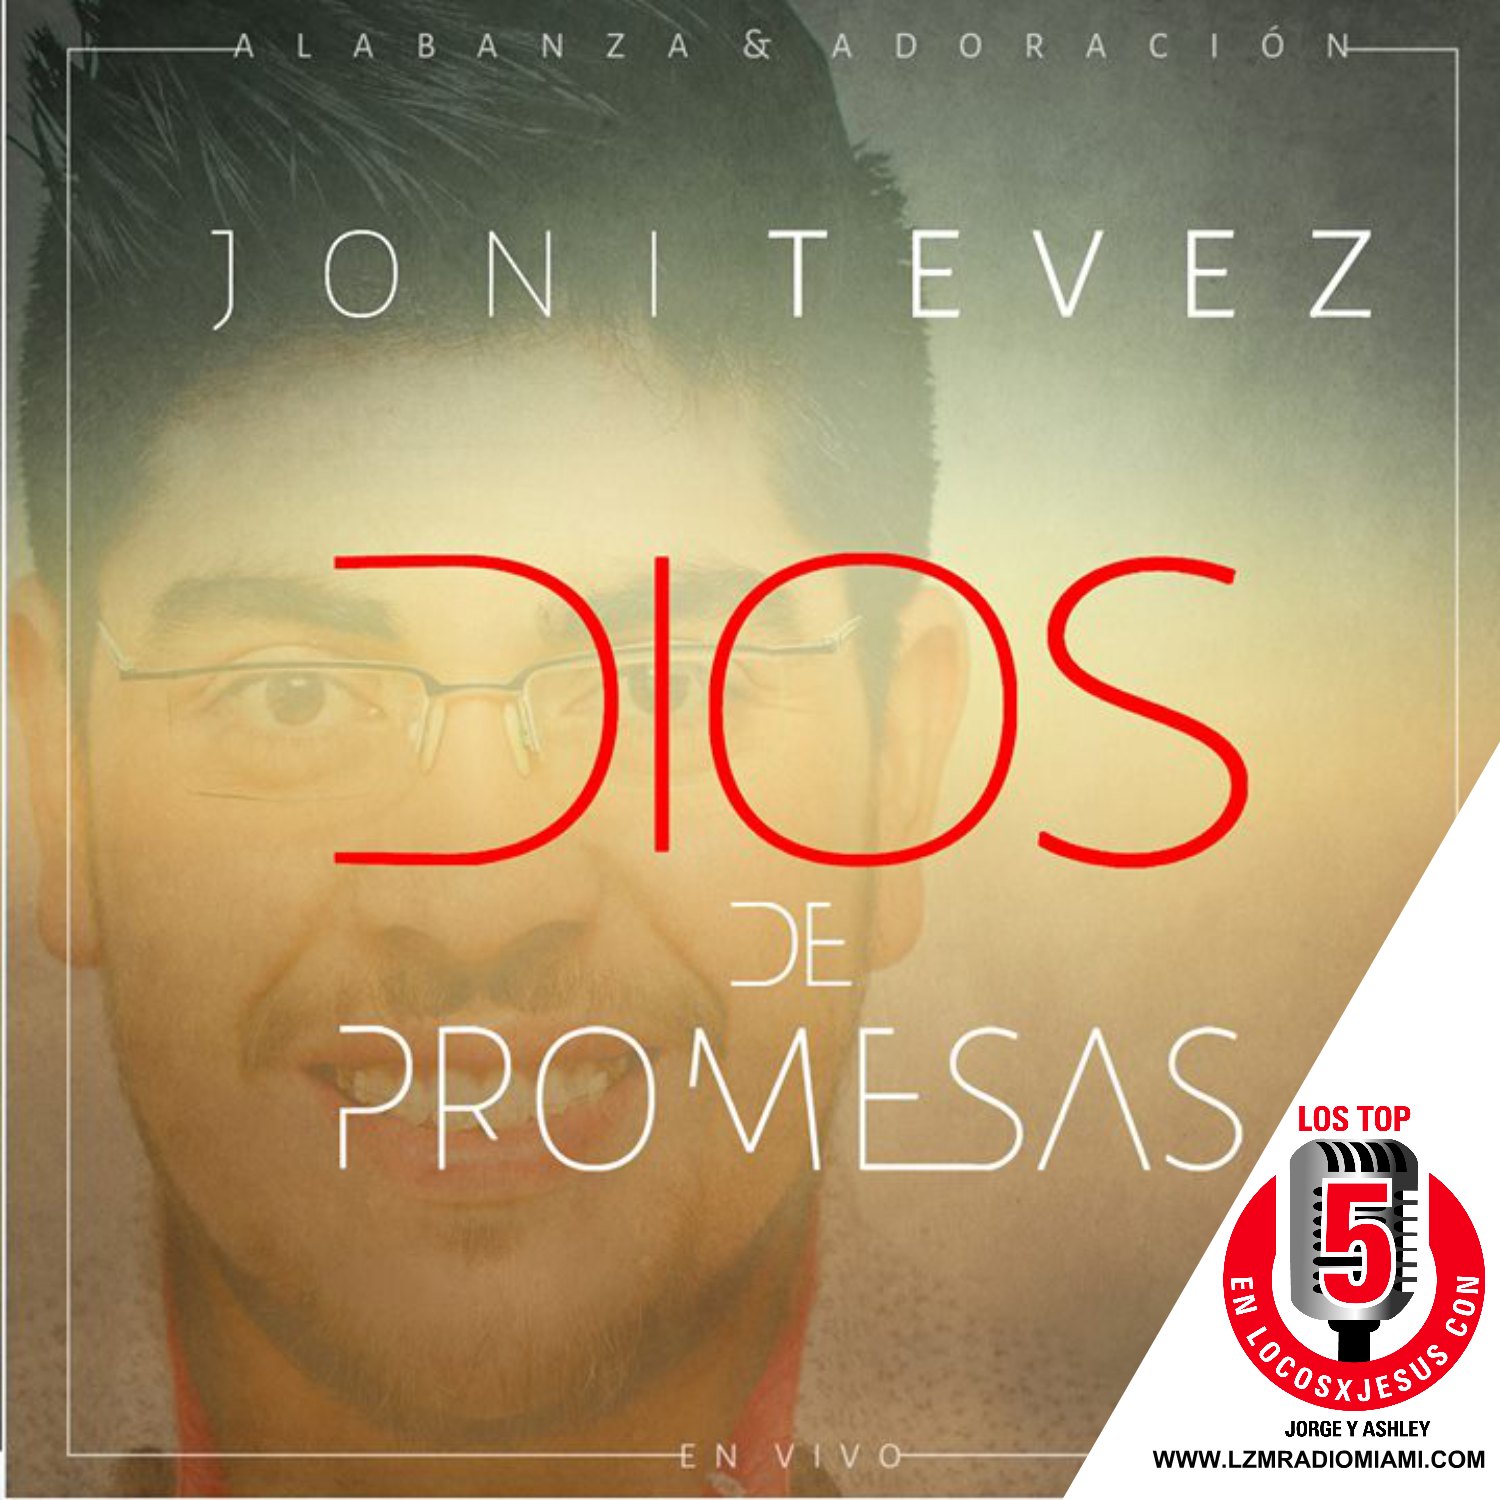 joni-tevez-dios-de-promesas-cd-cover-instagram-1500x1500